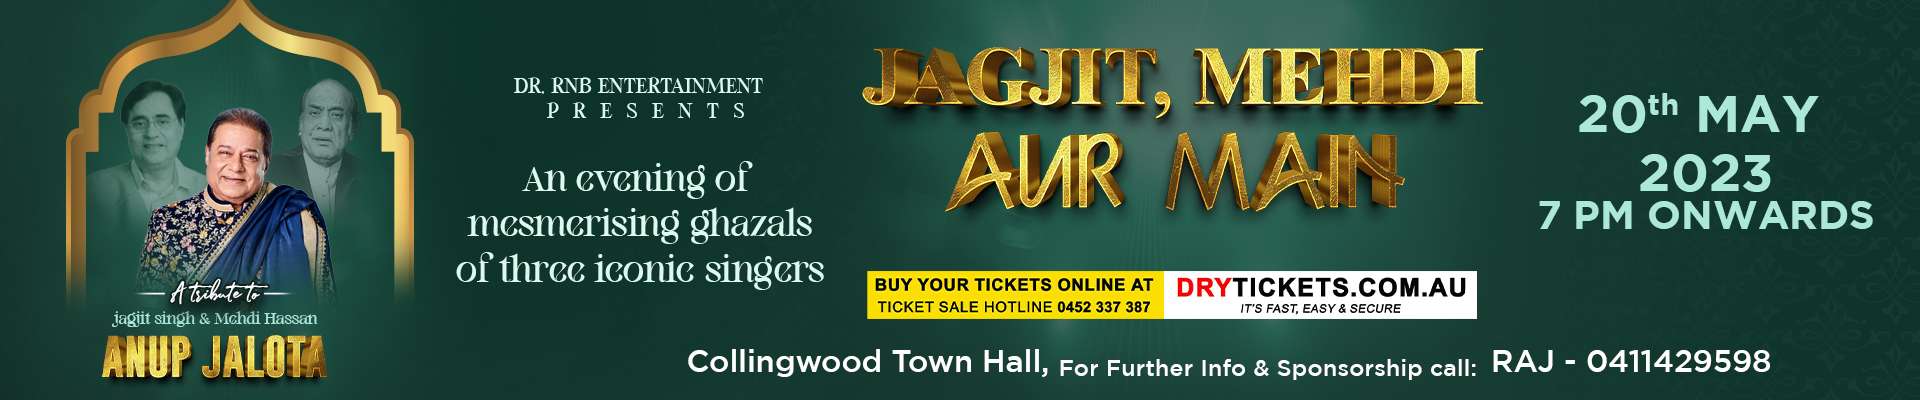 Jagjit, Mehdi aur Main - Padma Shri Anup Jalota Live In Melbourne